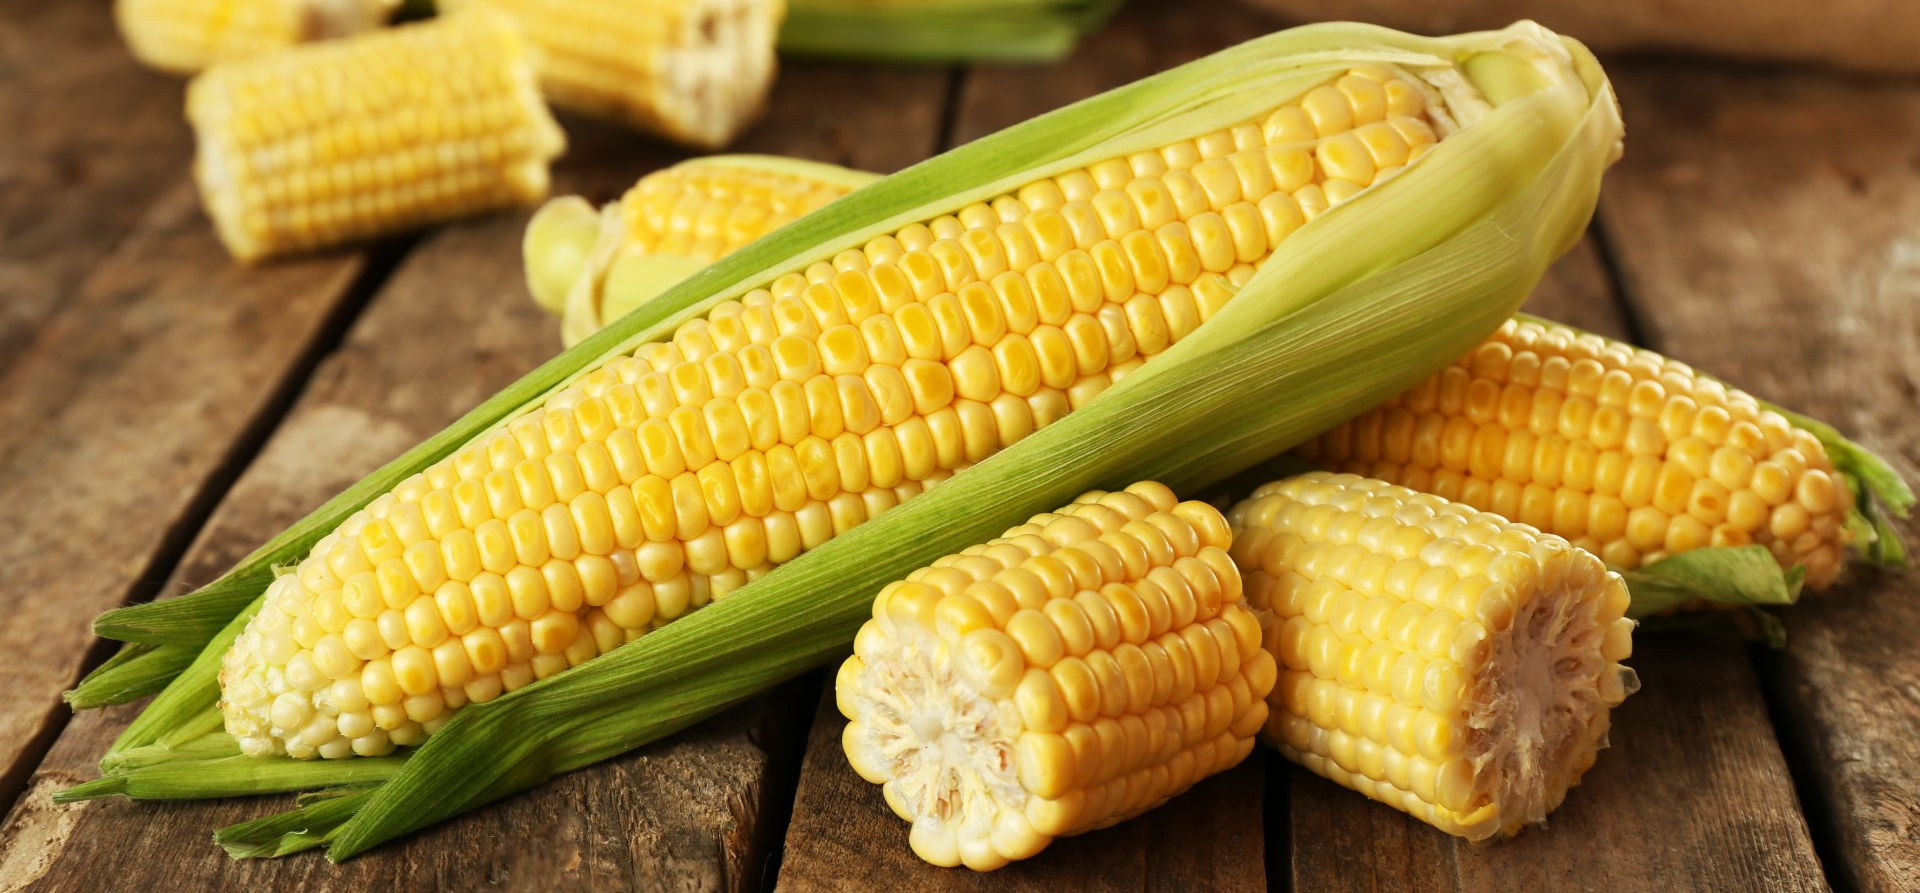 Bio-Based Ethyl Acetate made from corn